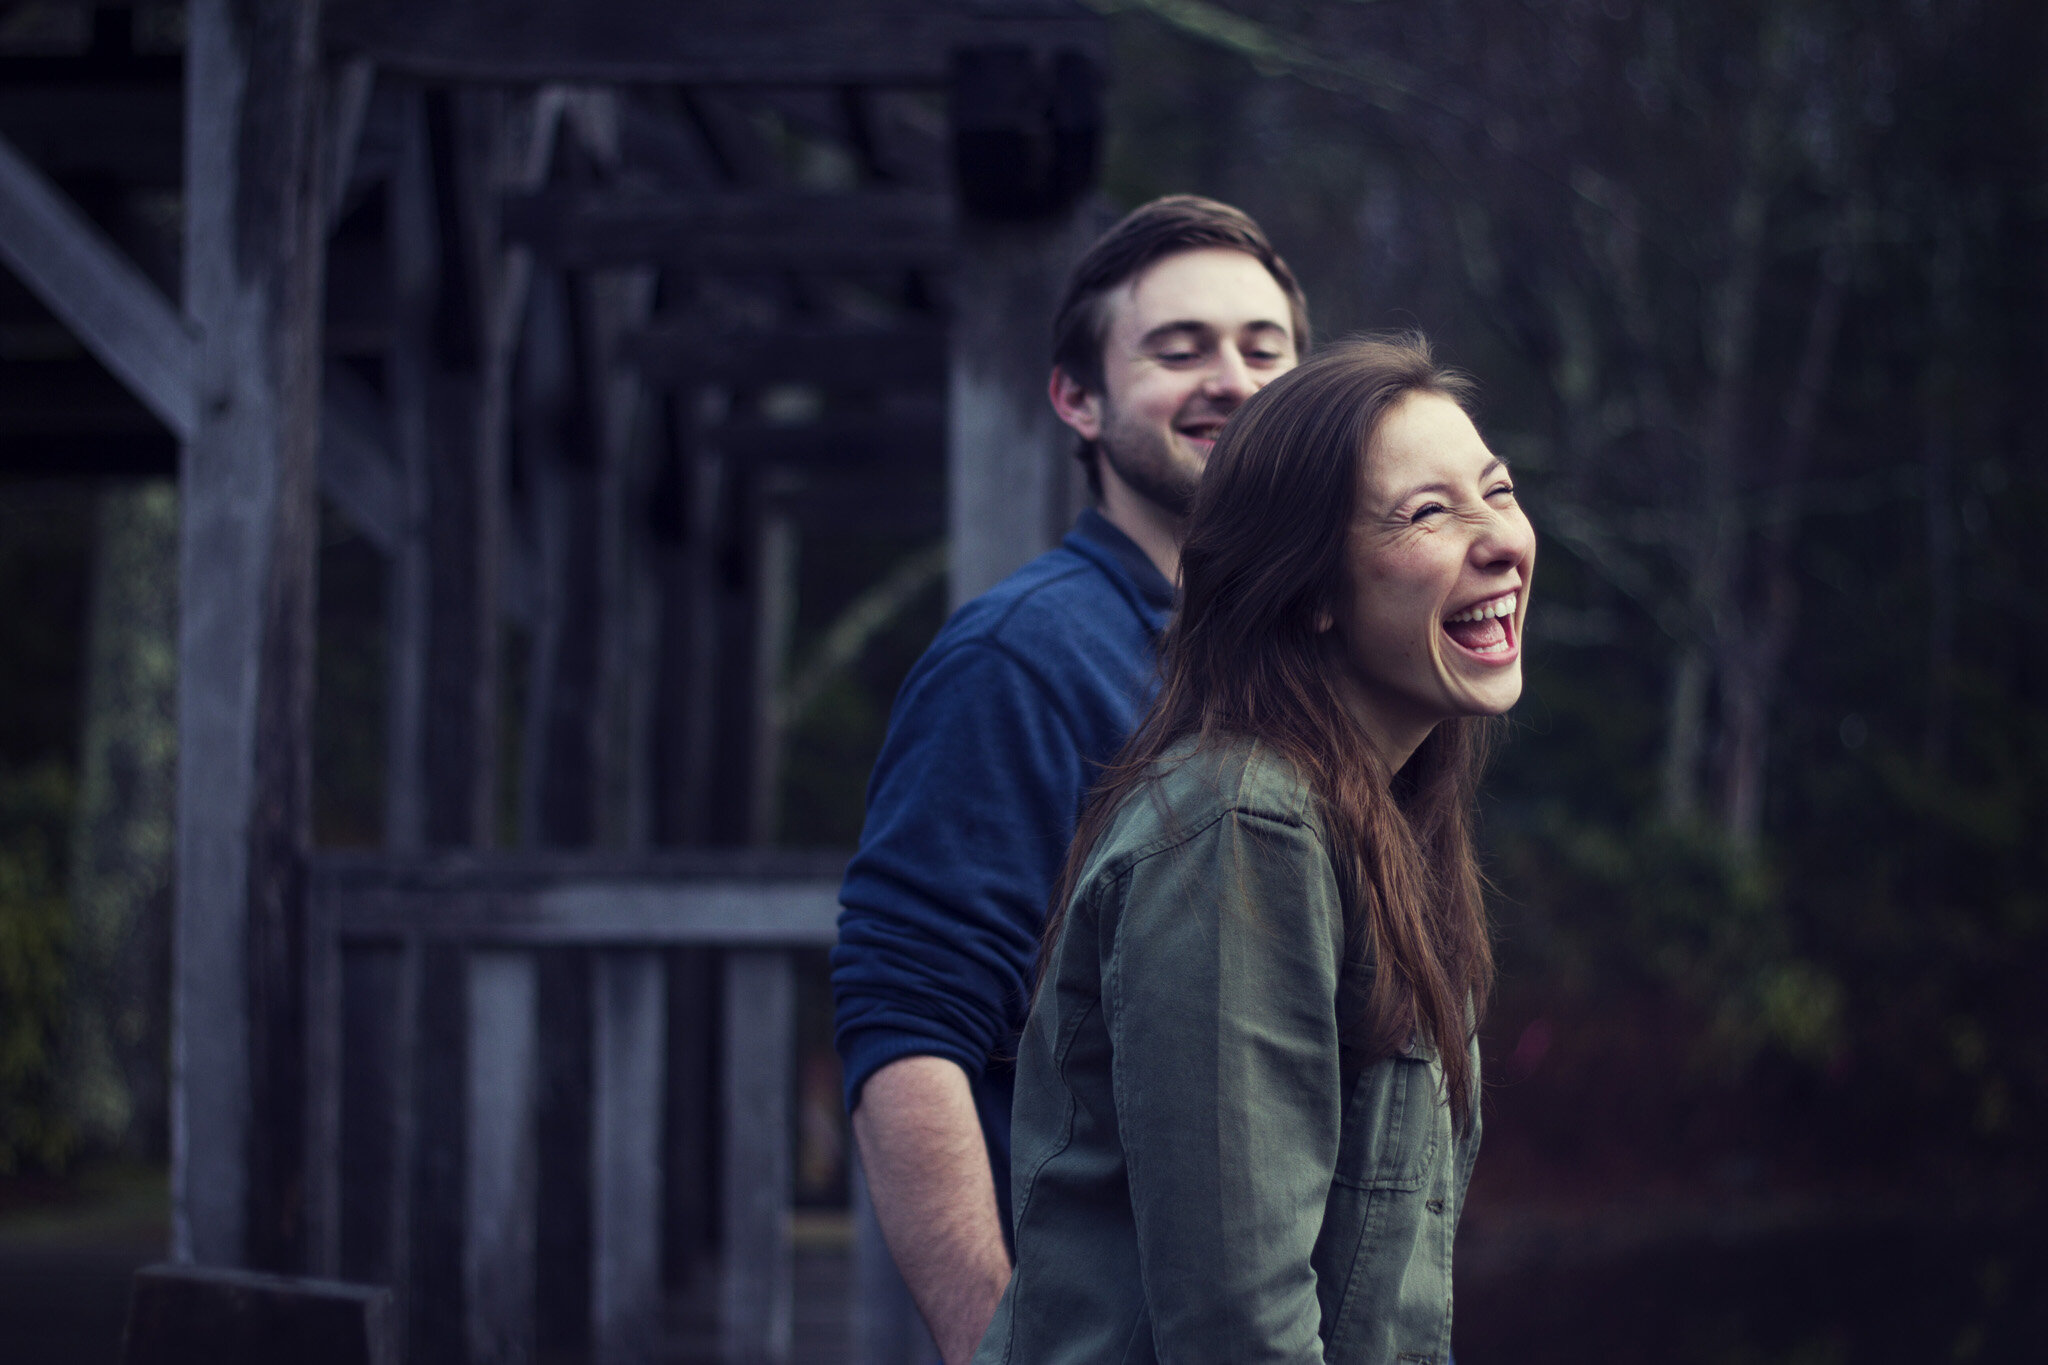 laughing-couple-on-bridge.jpg